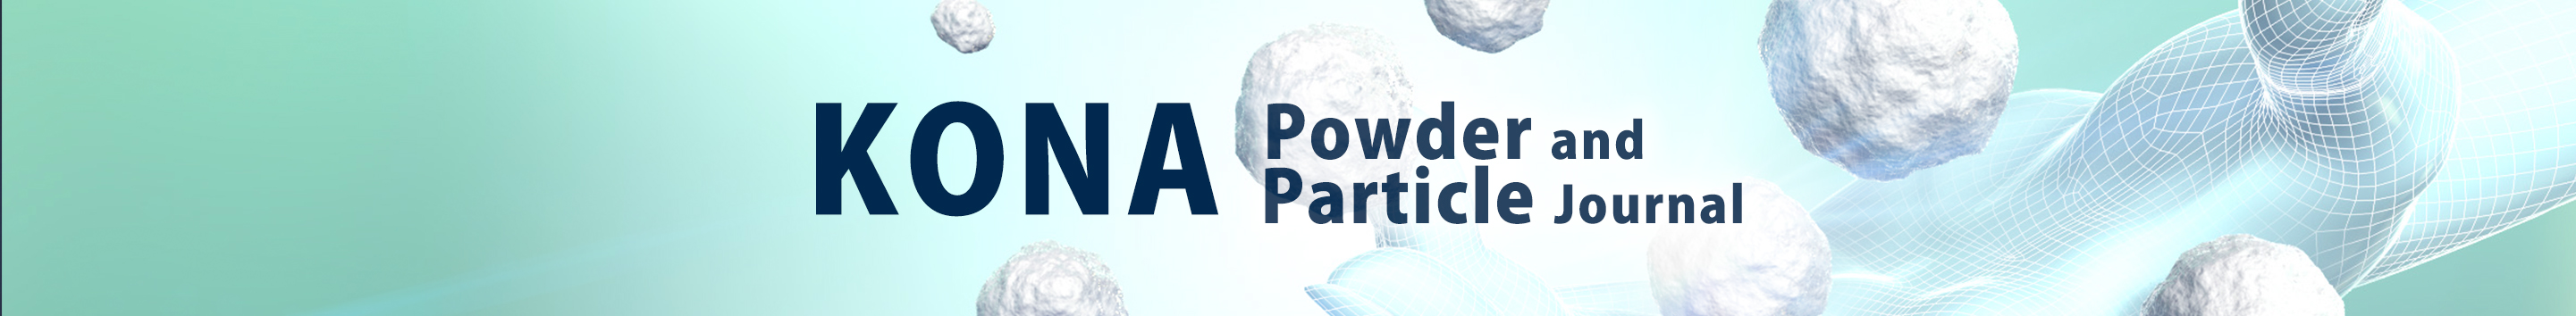 KONA Powder and Particle